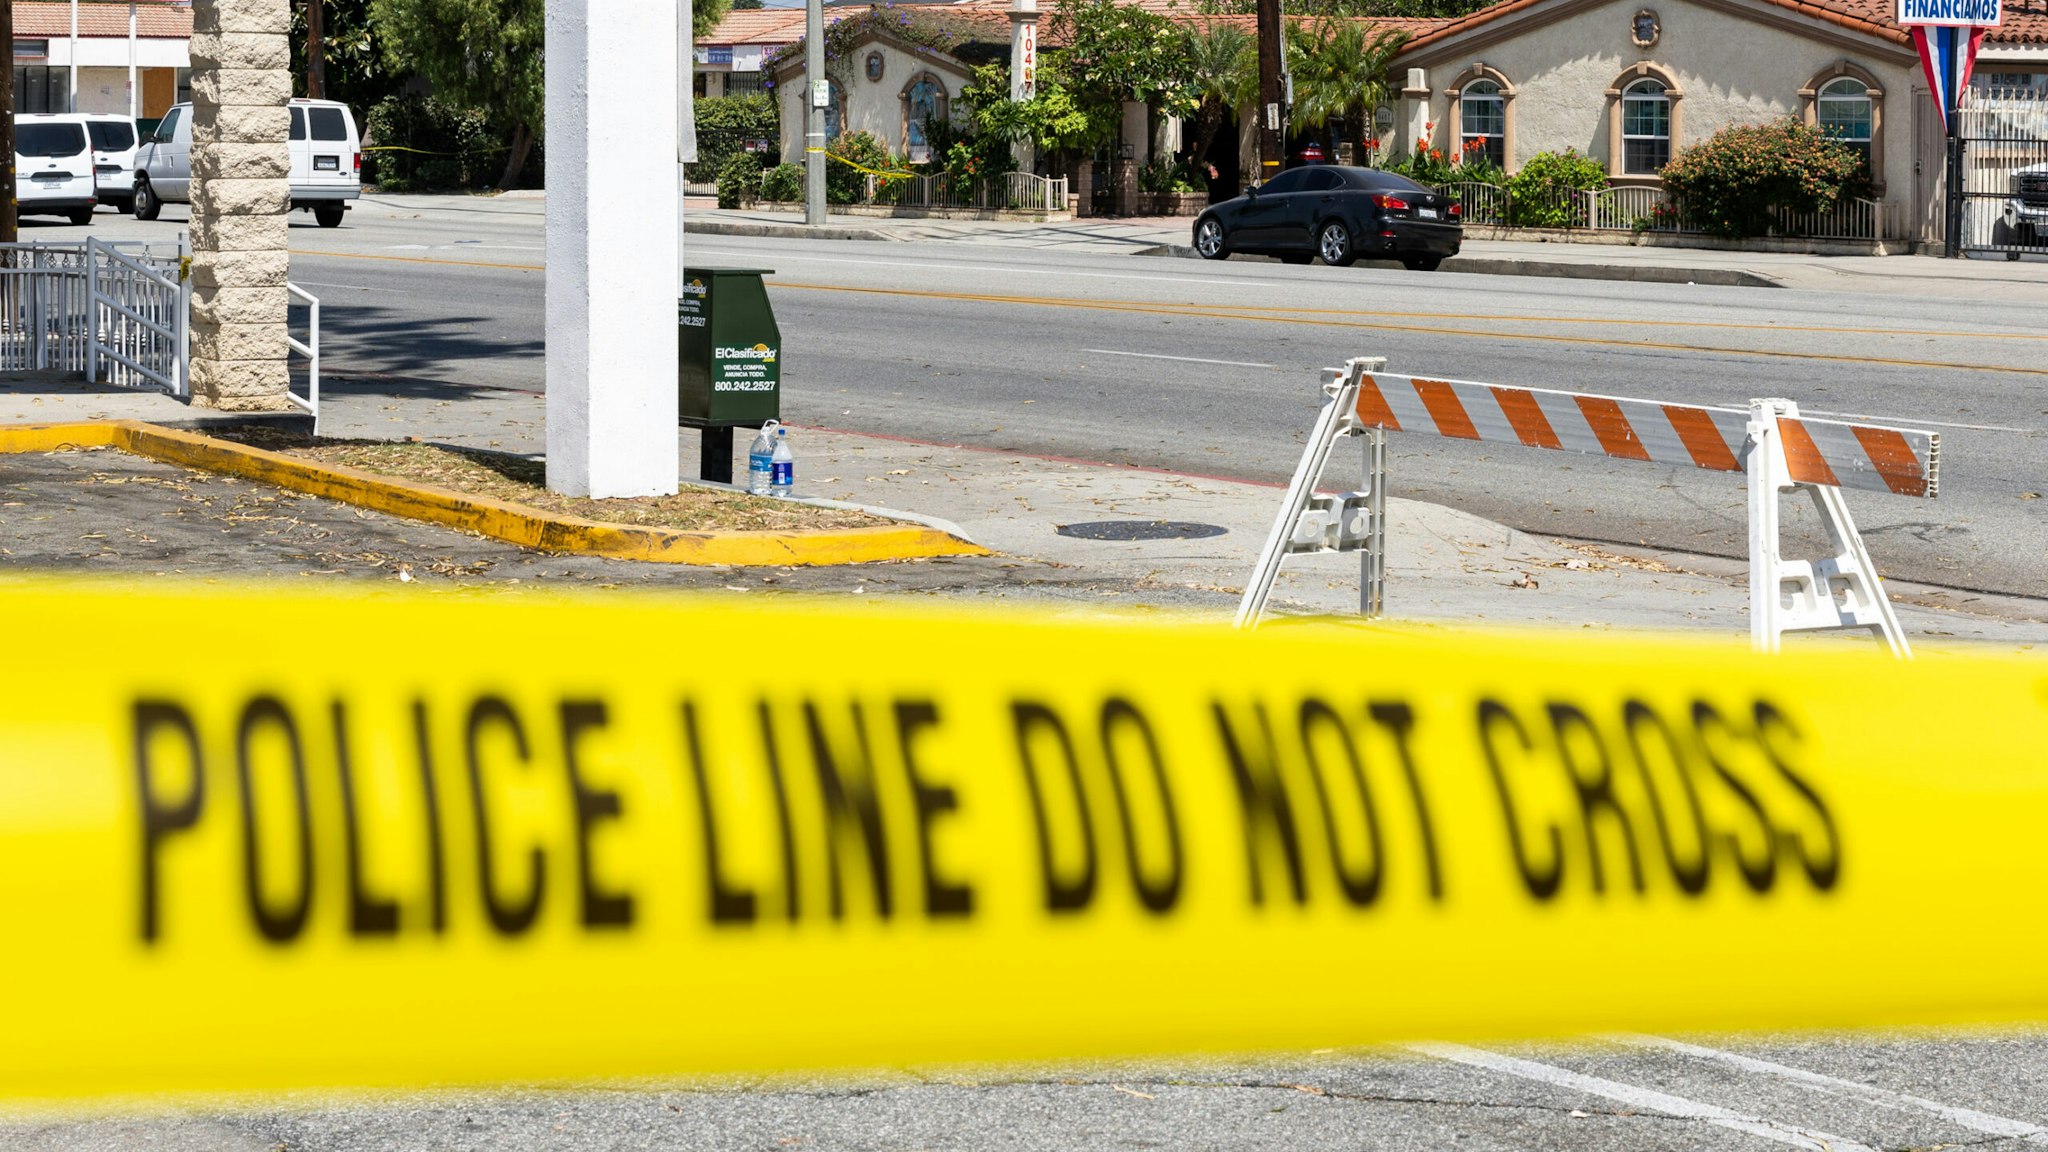 EL MONTE, CA - June 15: Police tape blocks off the scene of a shooting on Tuesday night that left two El Monte police officers dead at Siesta Inn Motel on June 15, 2022 in El Monte, CA.